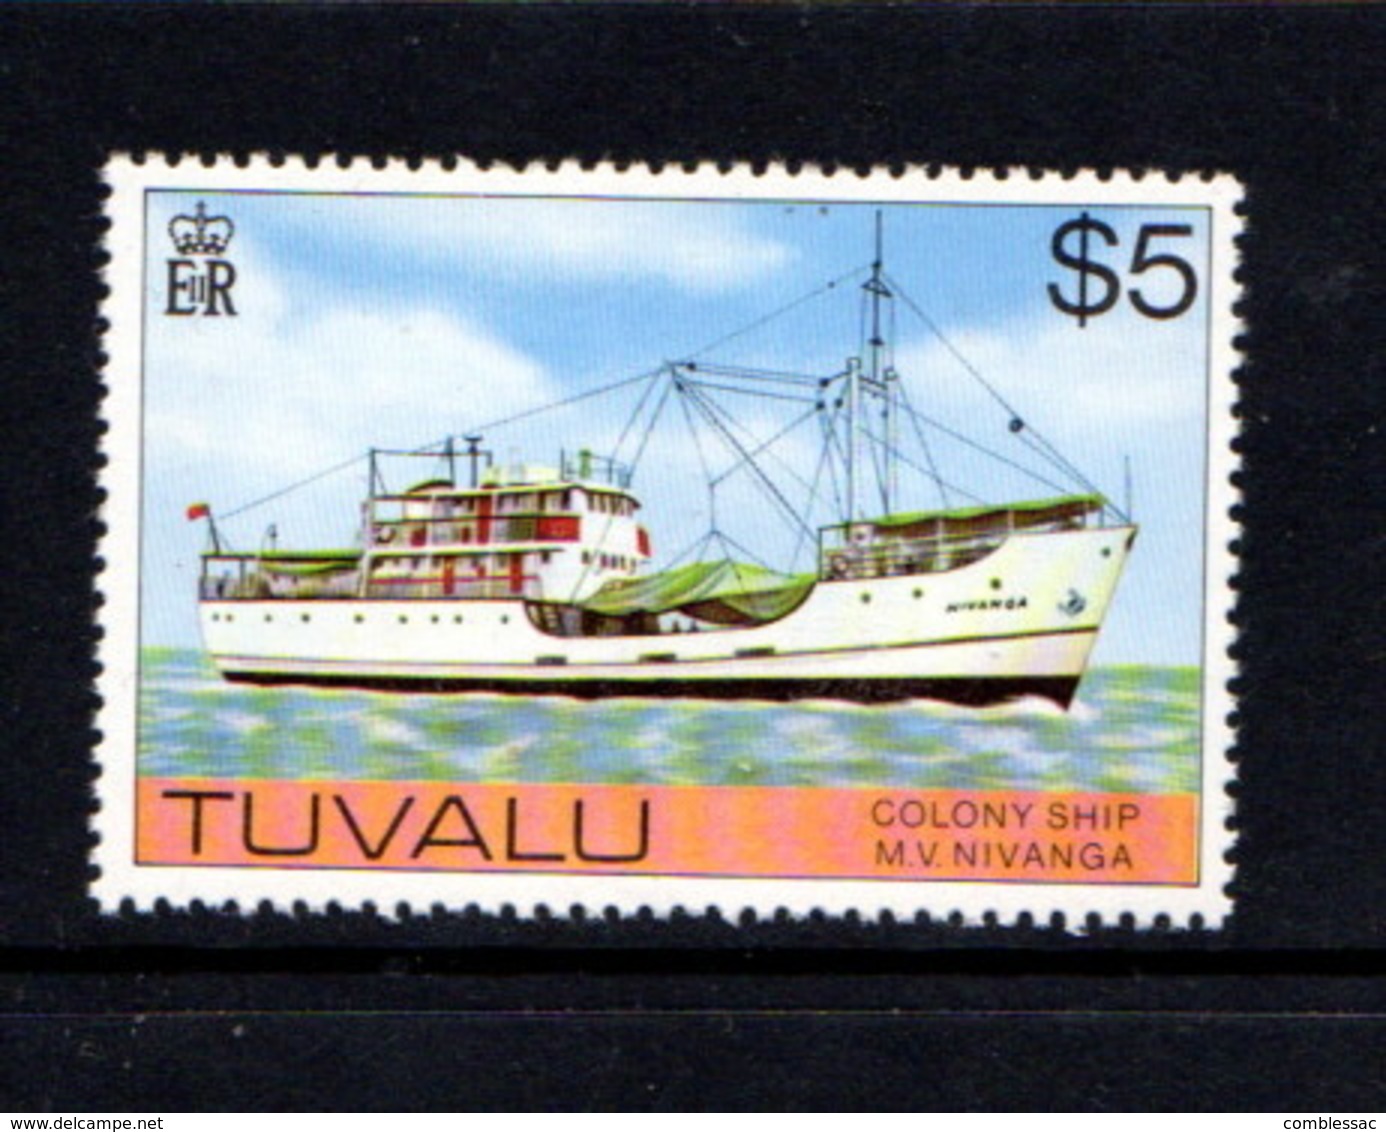 TUVALU    1977    $5  M V Nivanga     MNH - Tuvalu